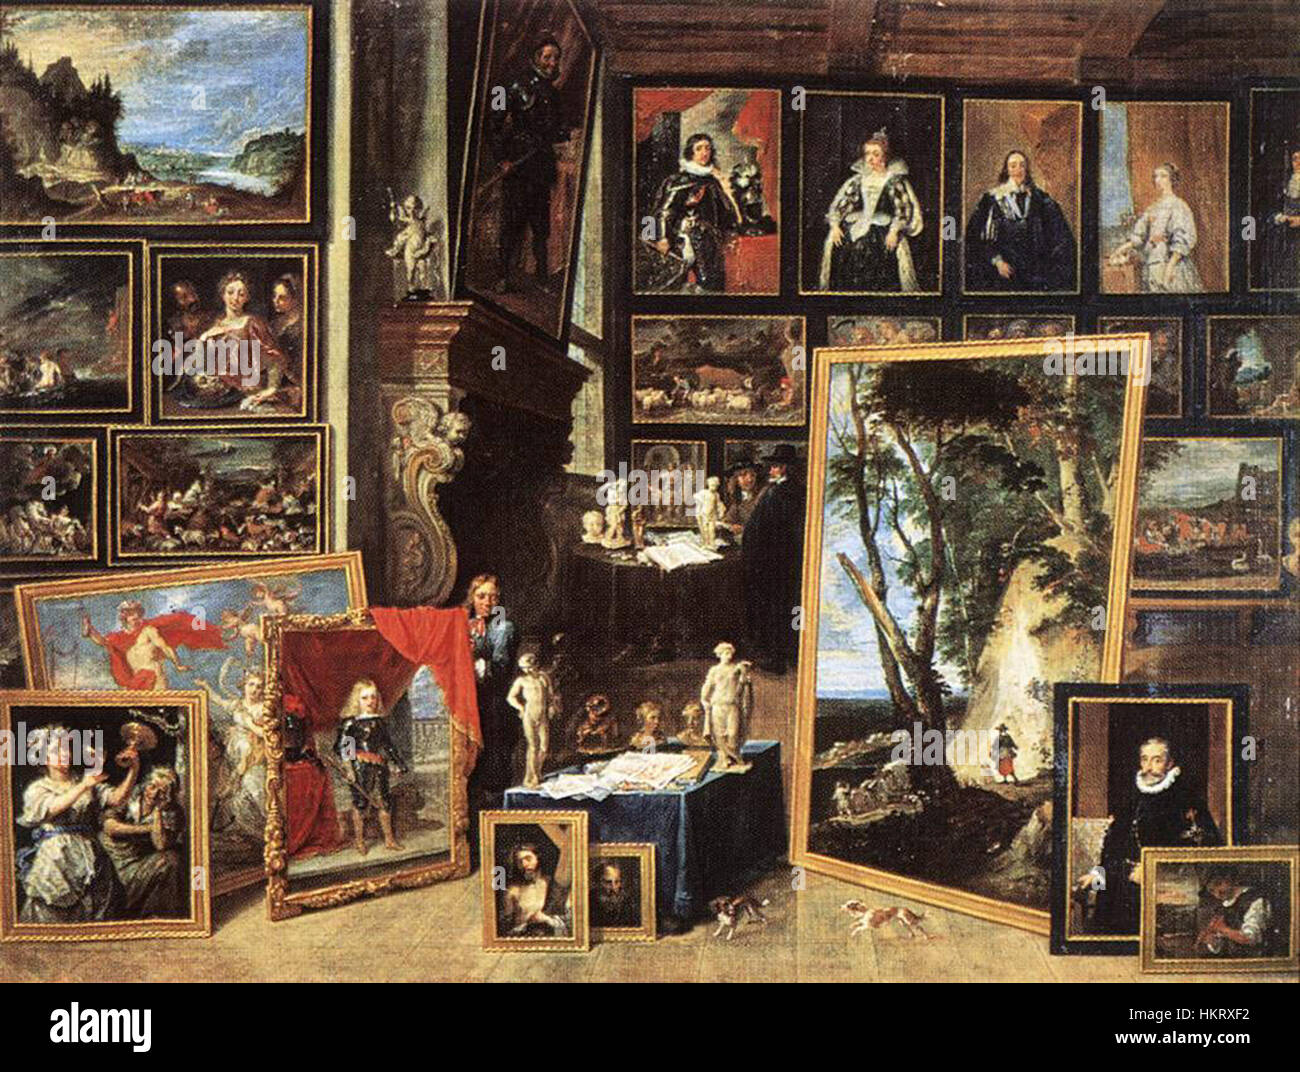 David Teniers (II) - The Gallery of Archduke Leopold in Brussels - WGA22067 Stock Photo